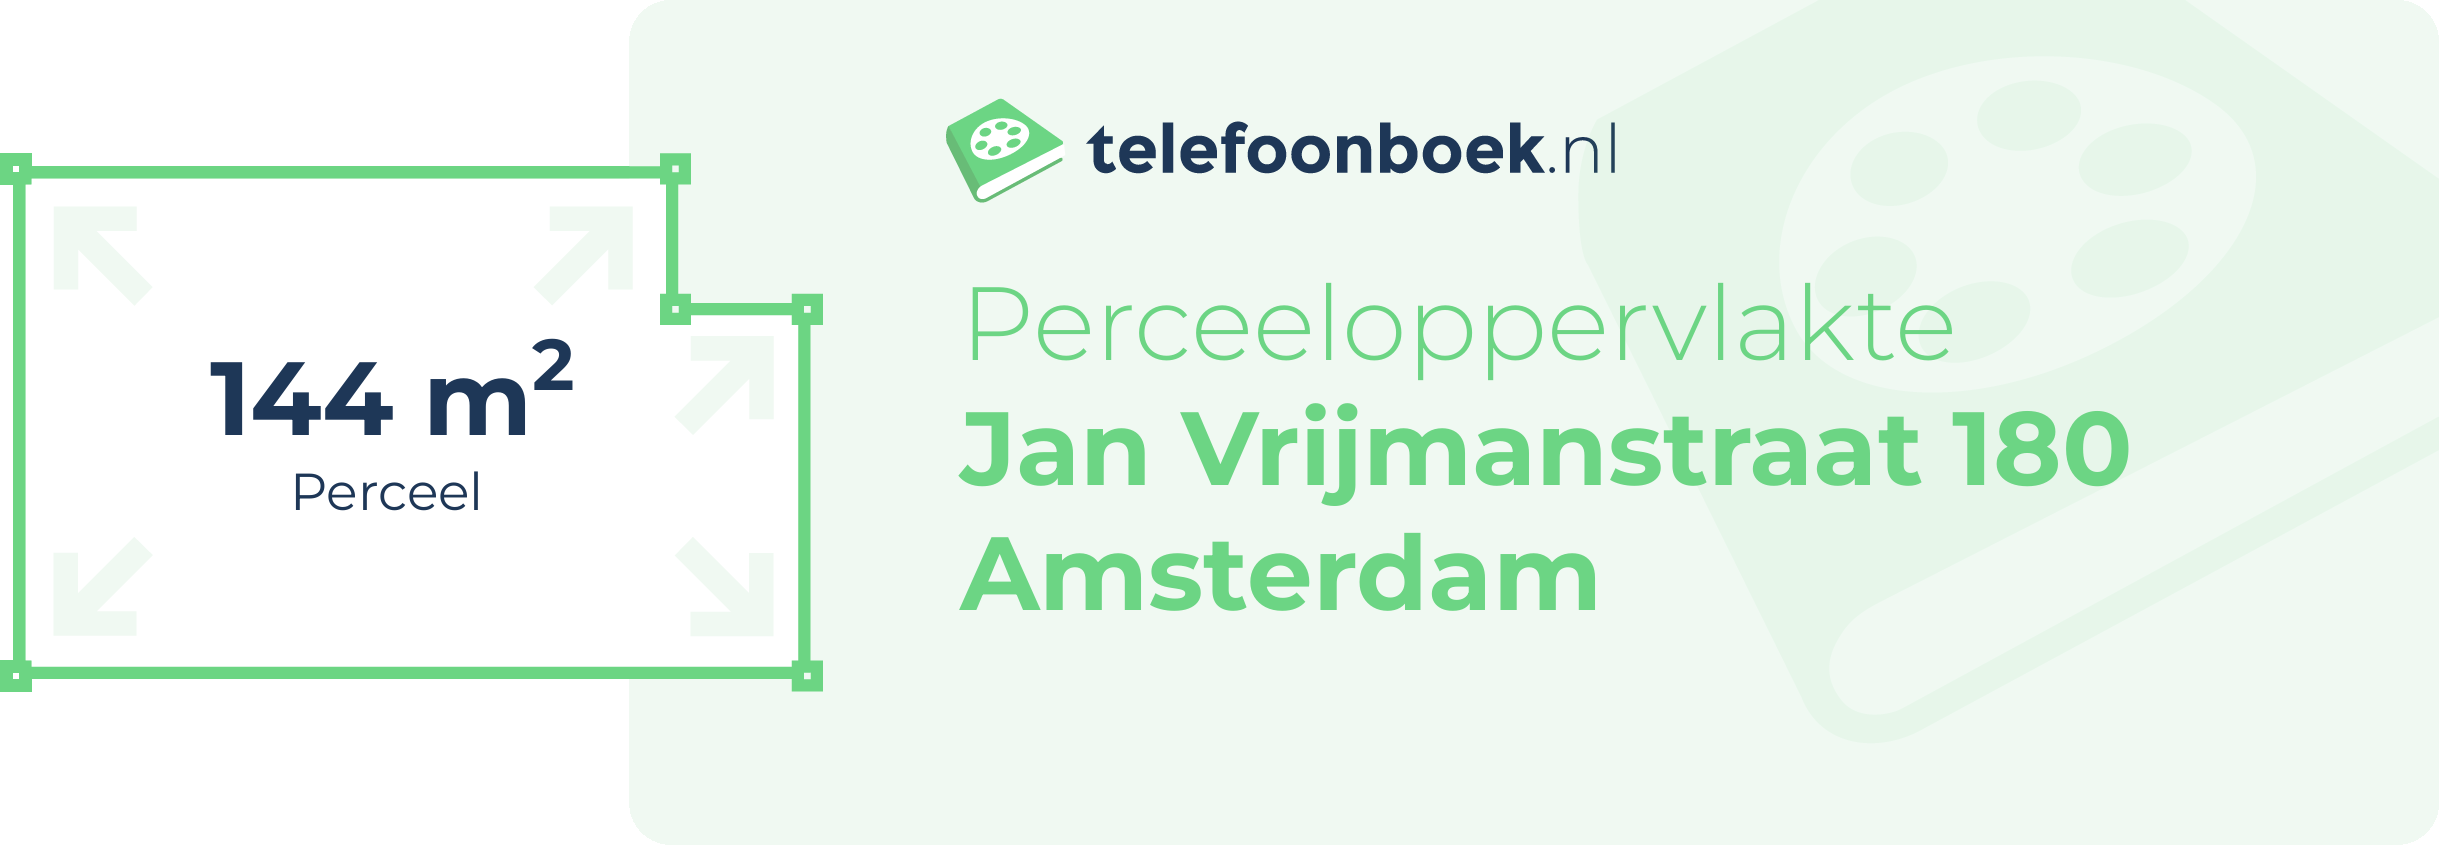 Perceeloppervlakte Jan Vrijmanstraat 180 Amsterdam